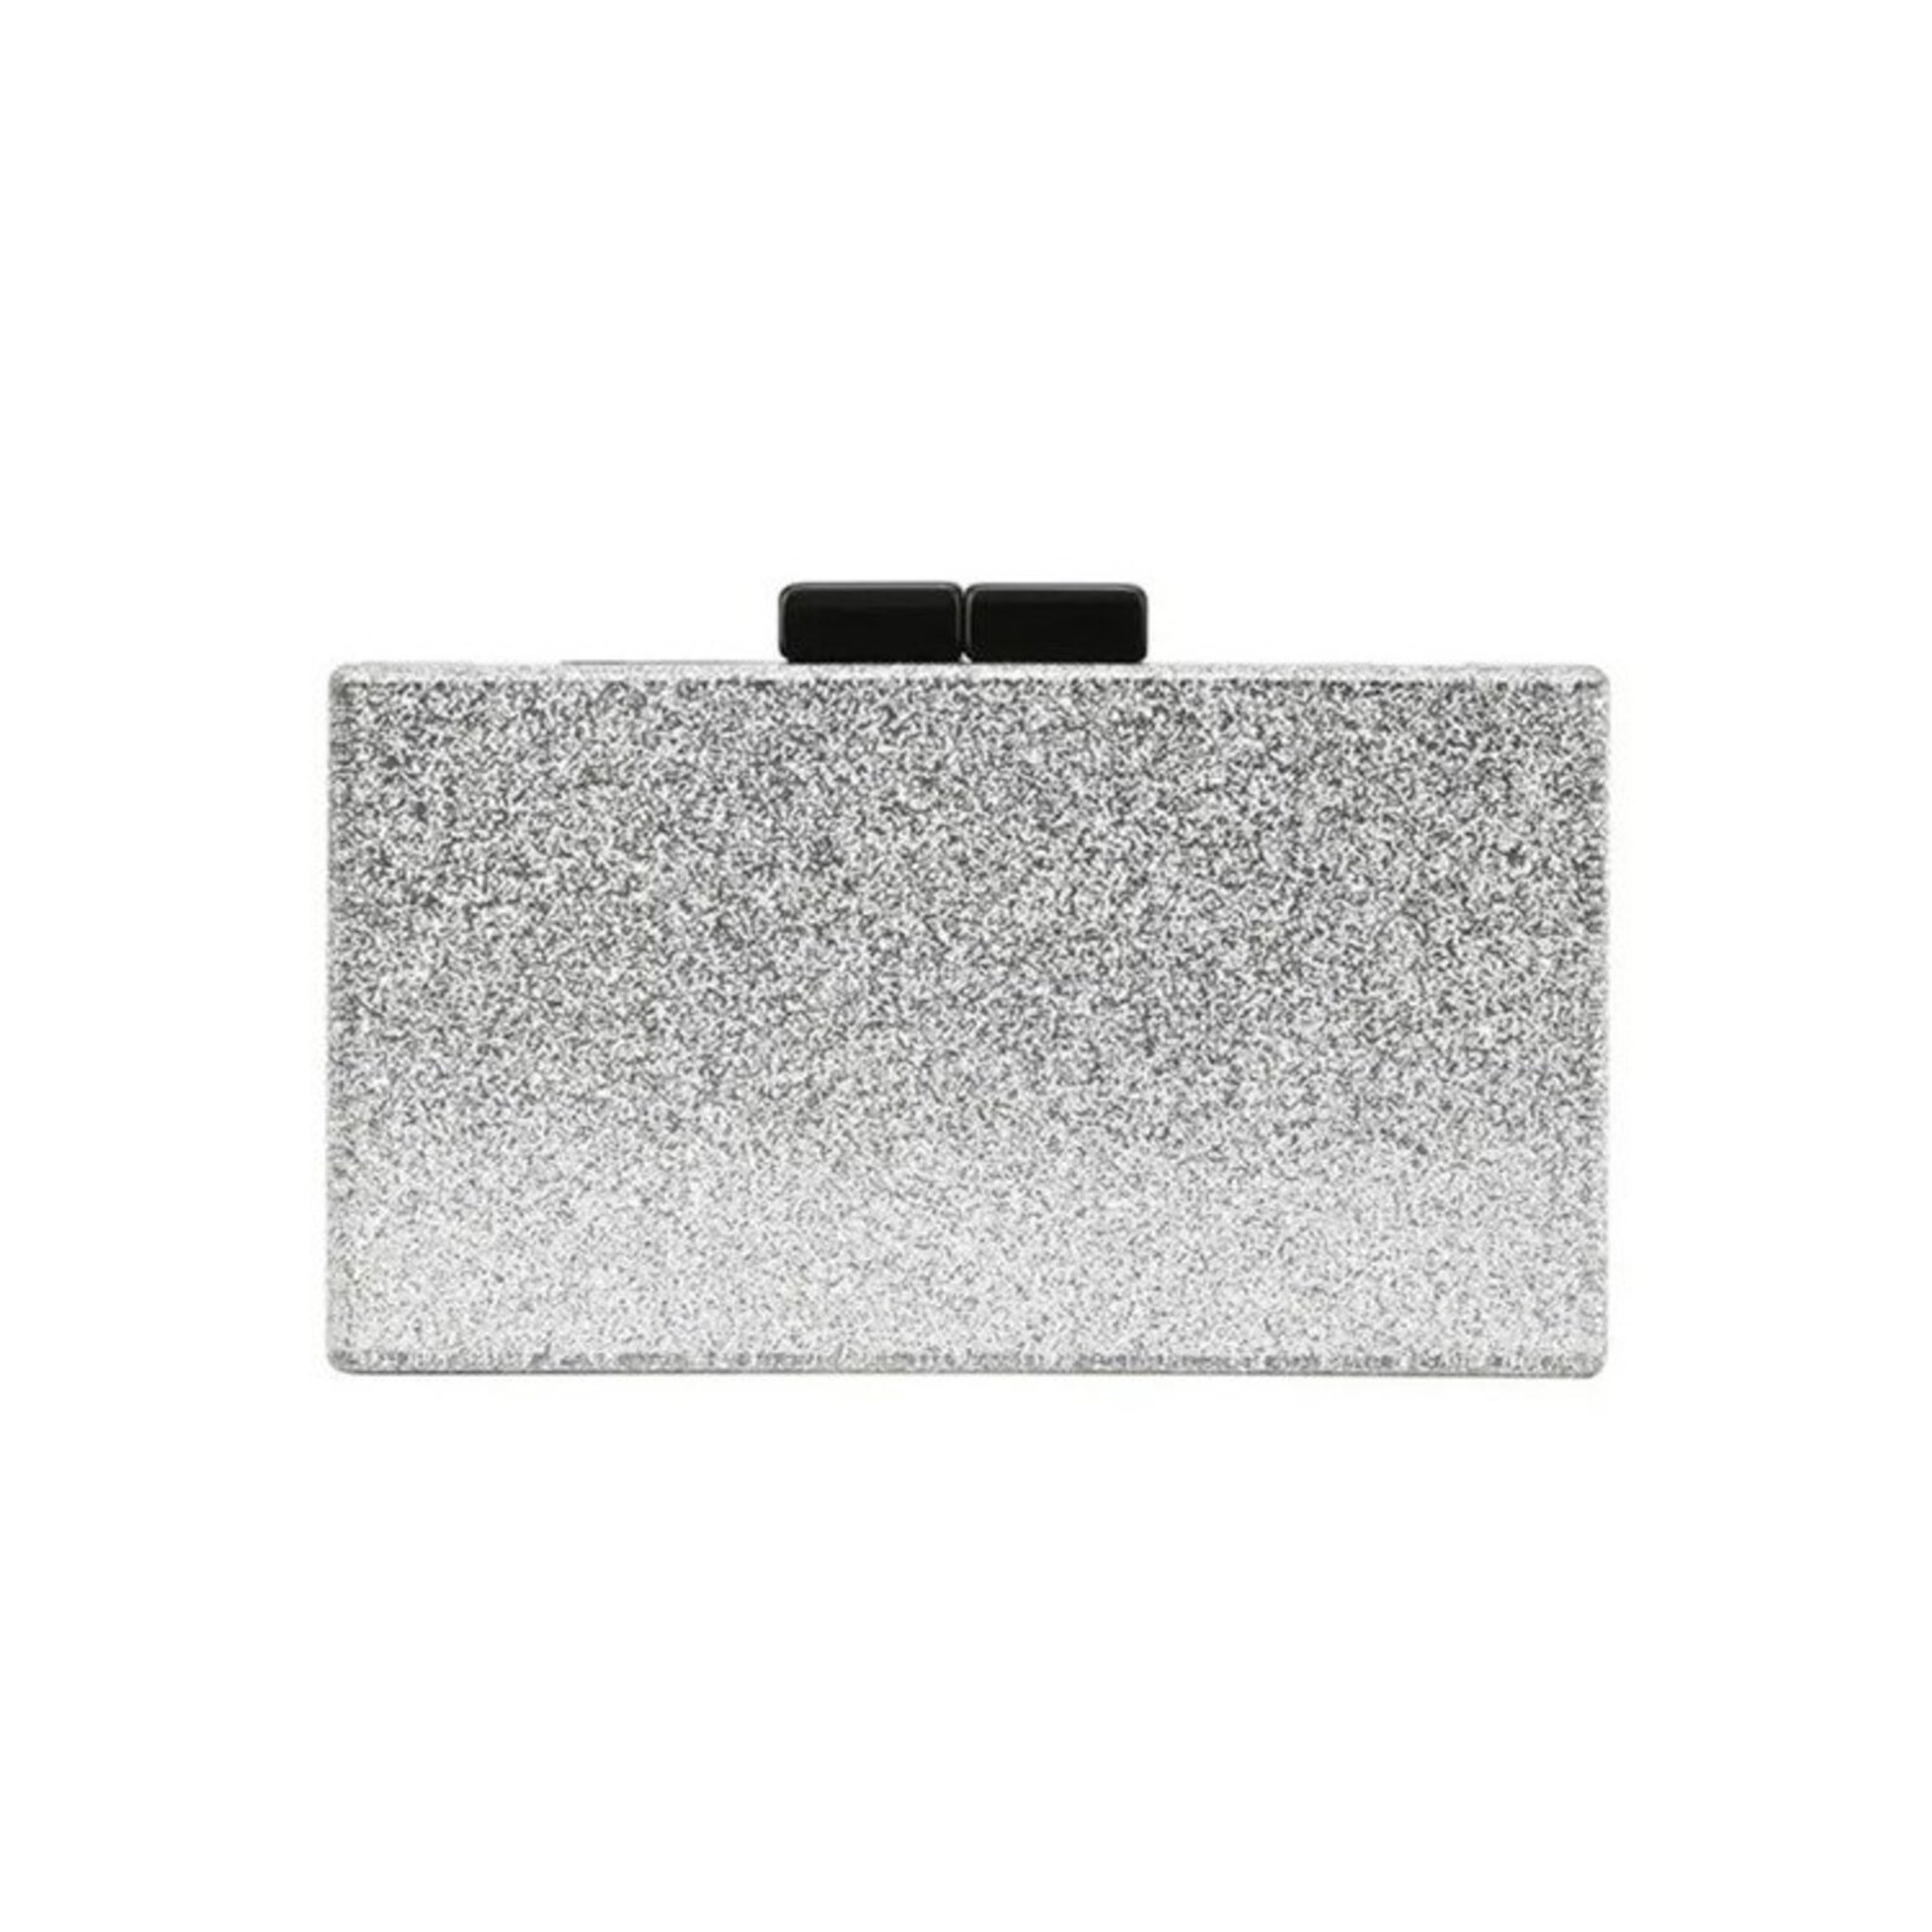 Silver Glitter Clutch with Black Acrylic Border